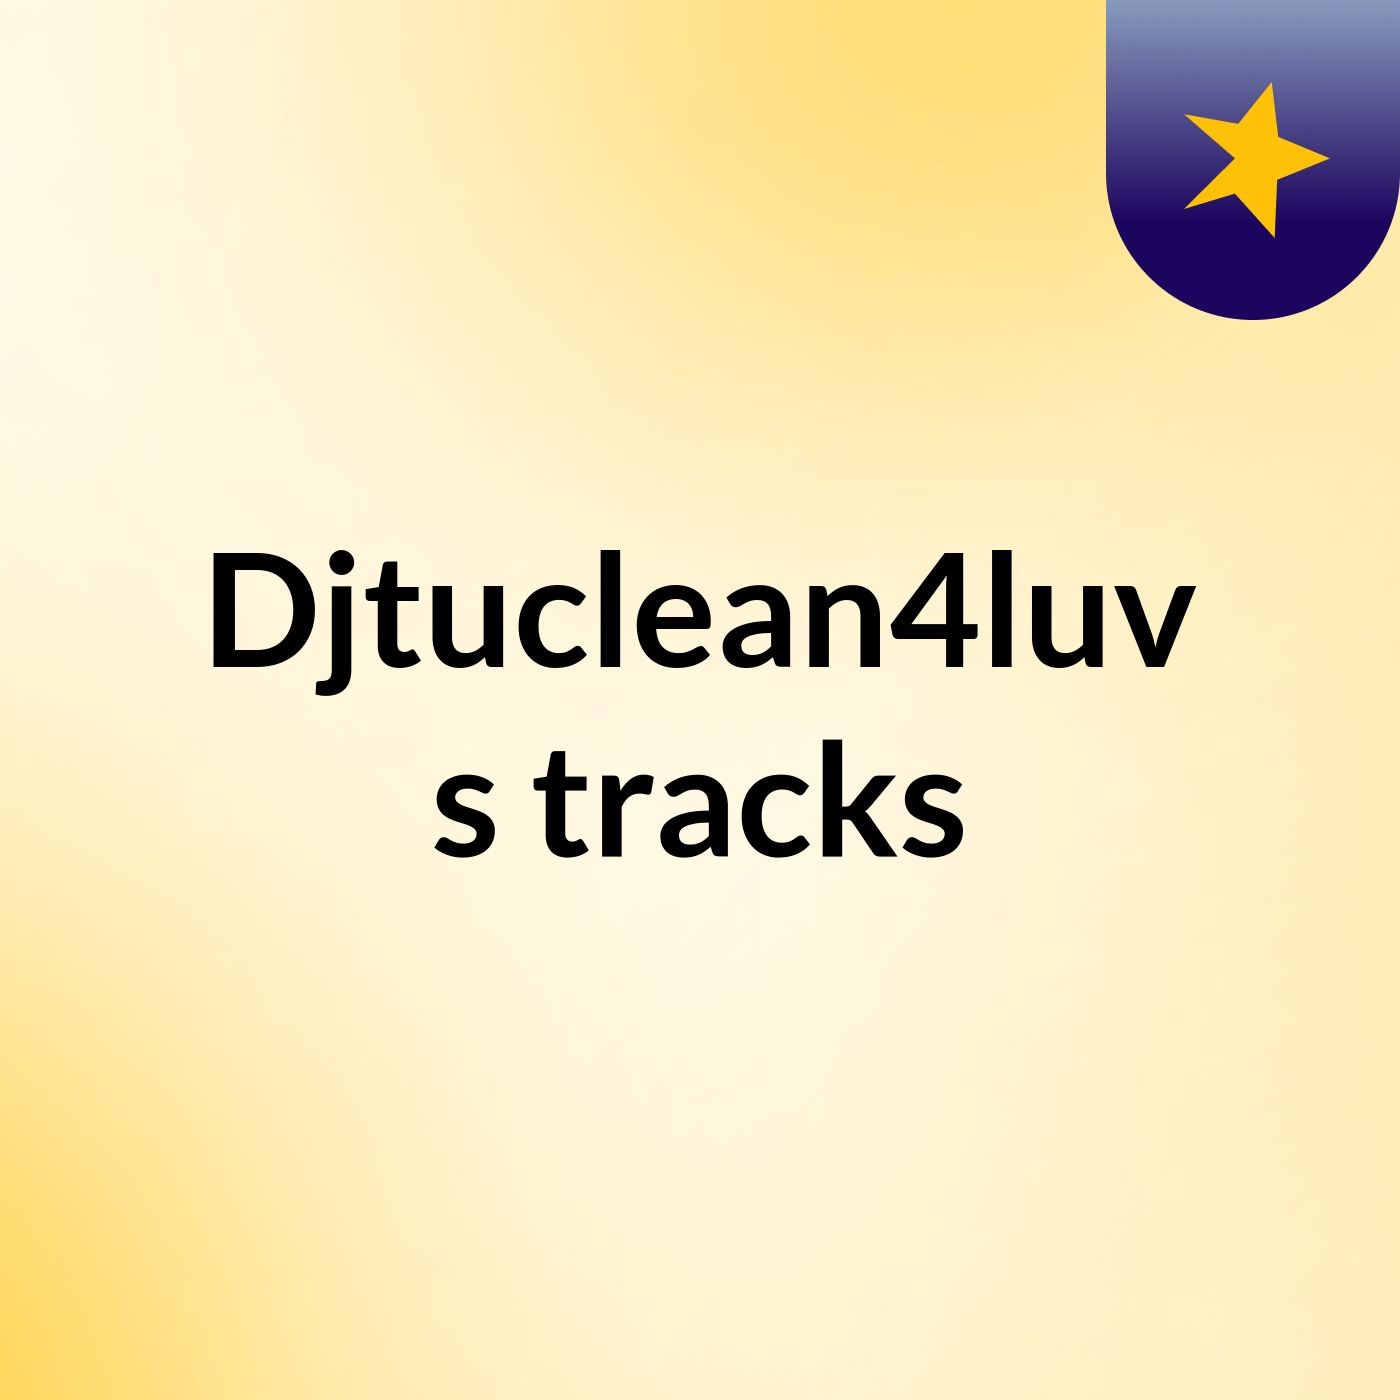 Djtuclean4luv's tracks